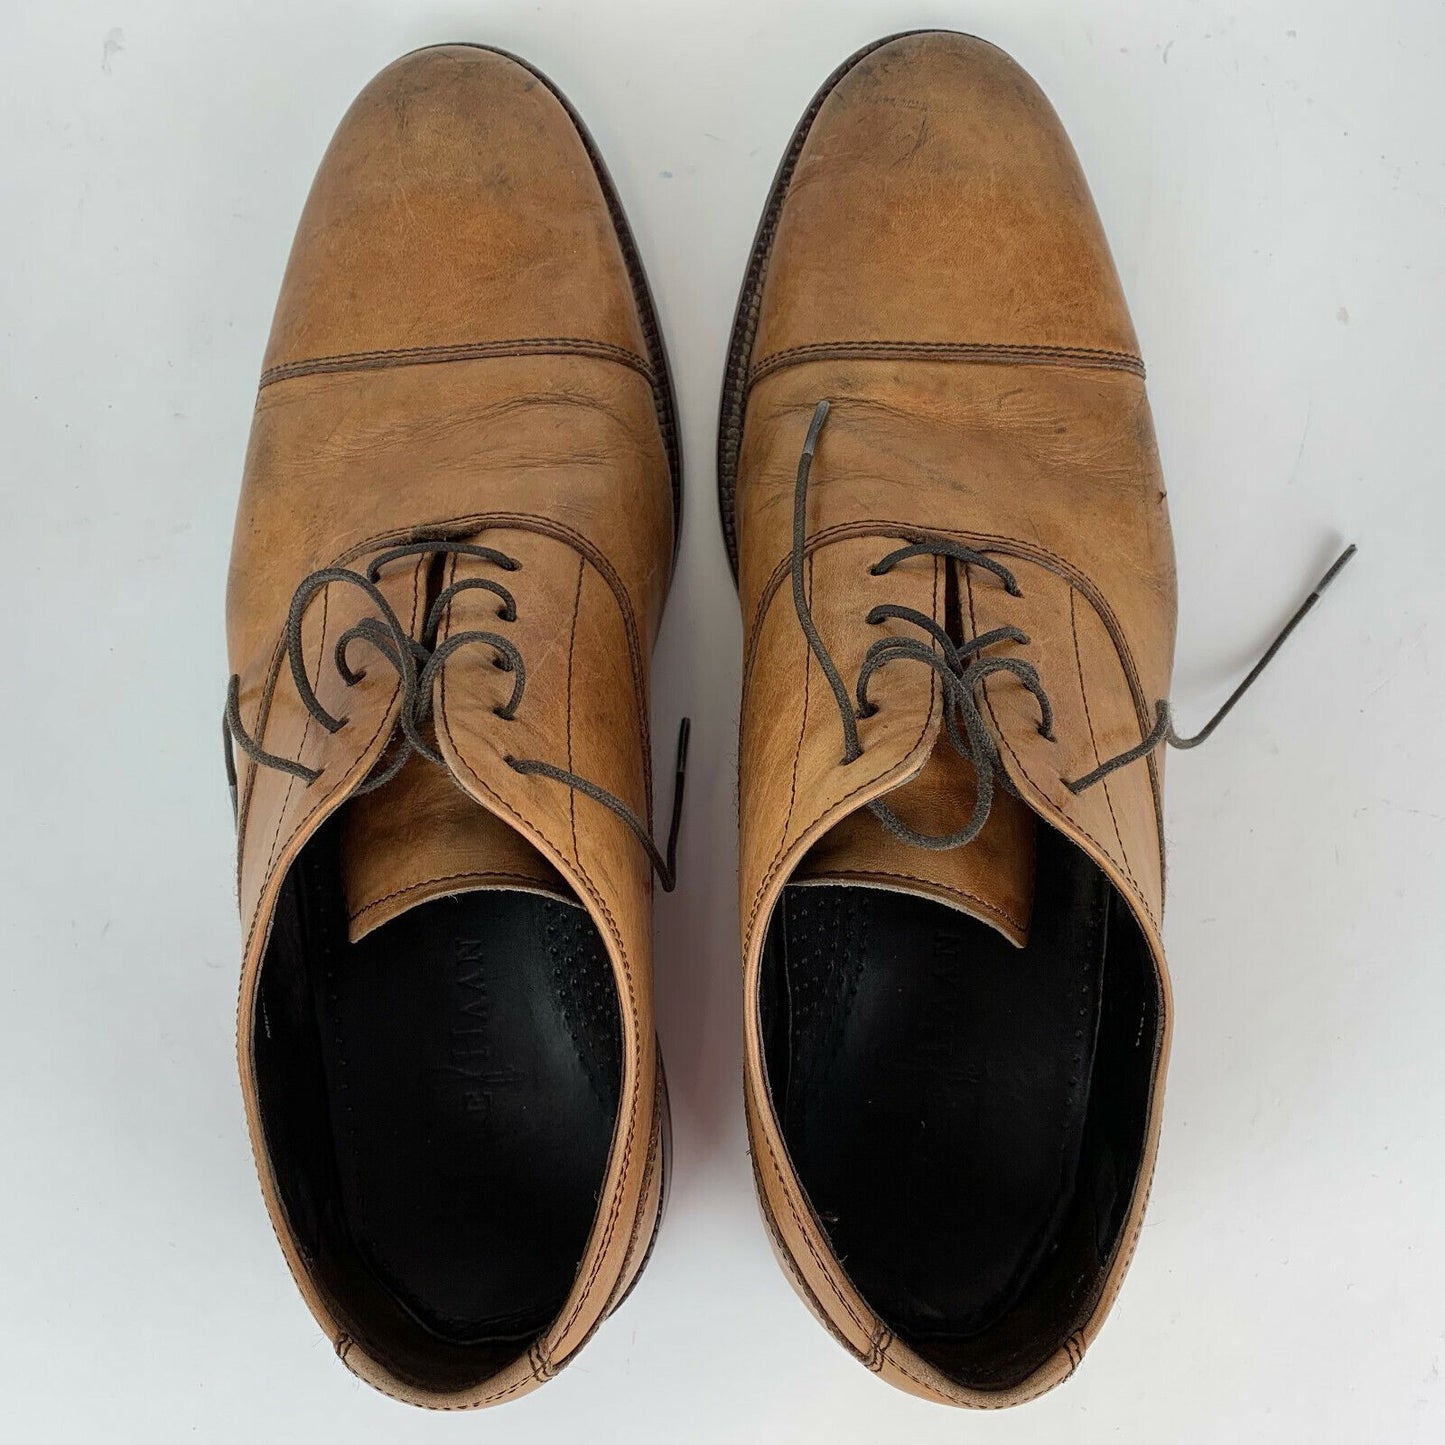 Cole Haan Mens Williams British Tan Cap Toe Oxford Shoes C12337 Lace Up 10 M